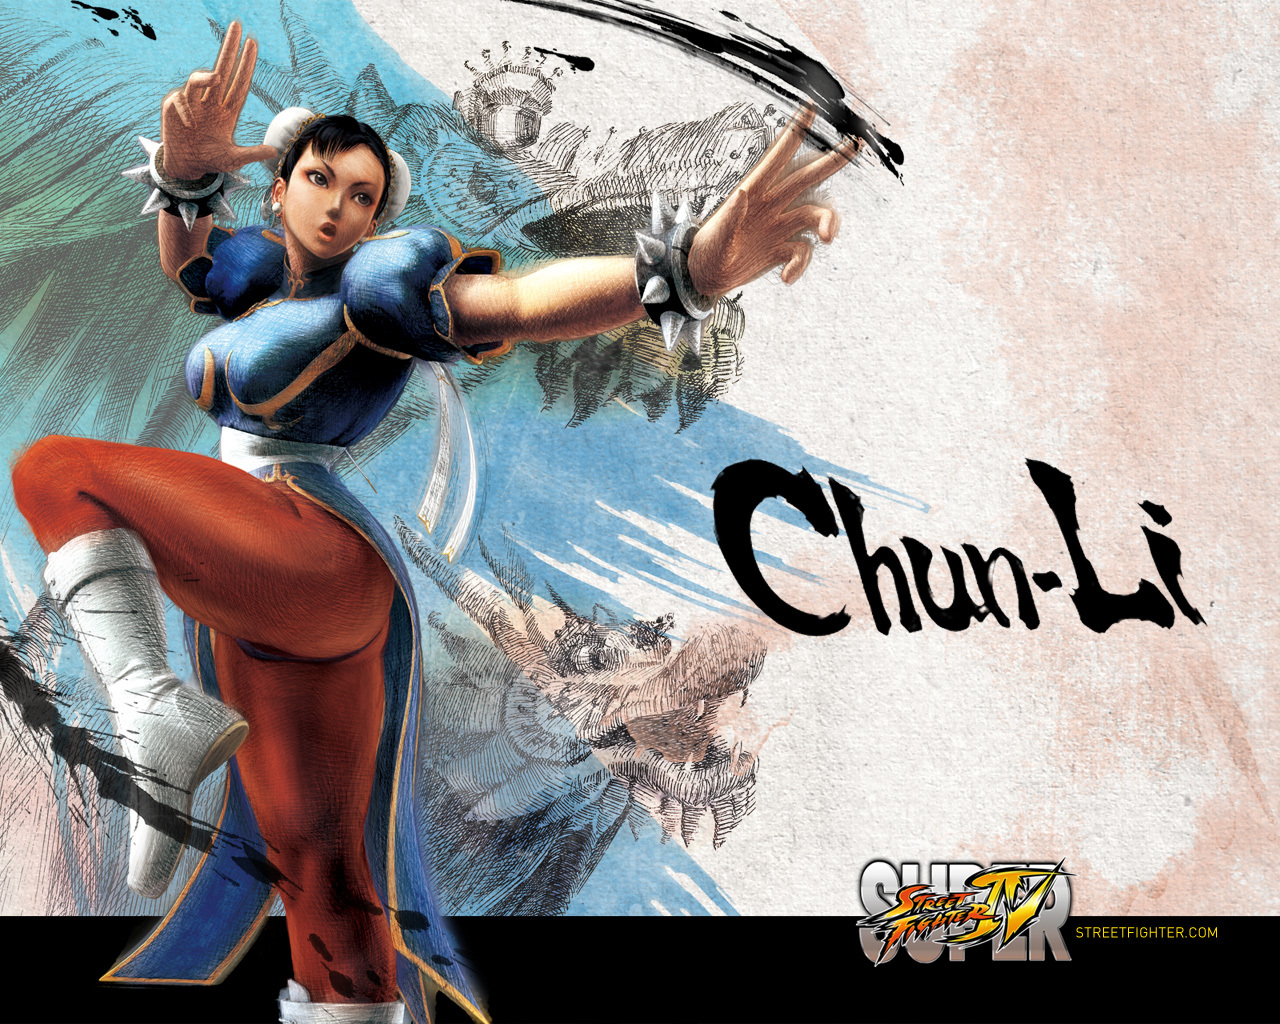 Street Fighter Image Chun Li Wallpaper Photos